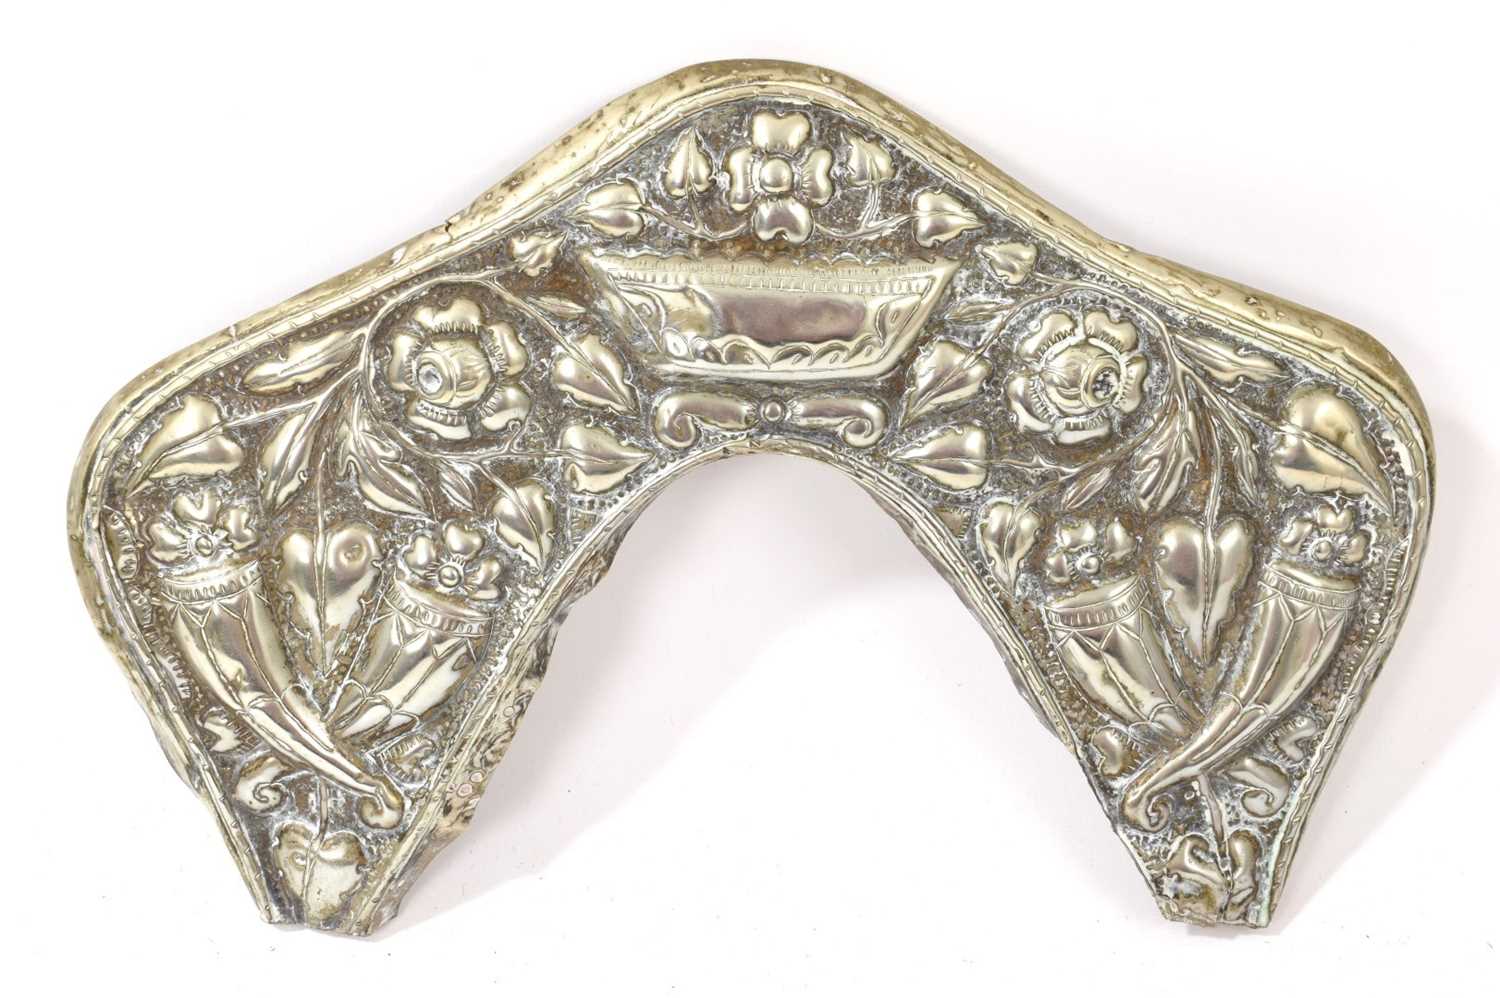 19th century South American white metal saddle mount